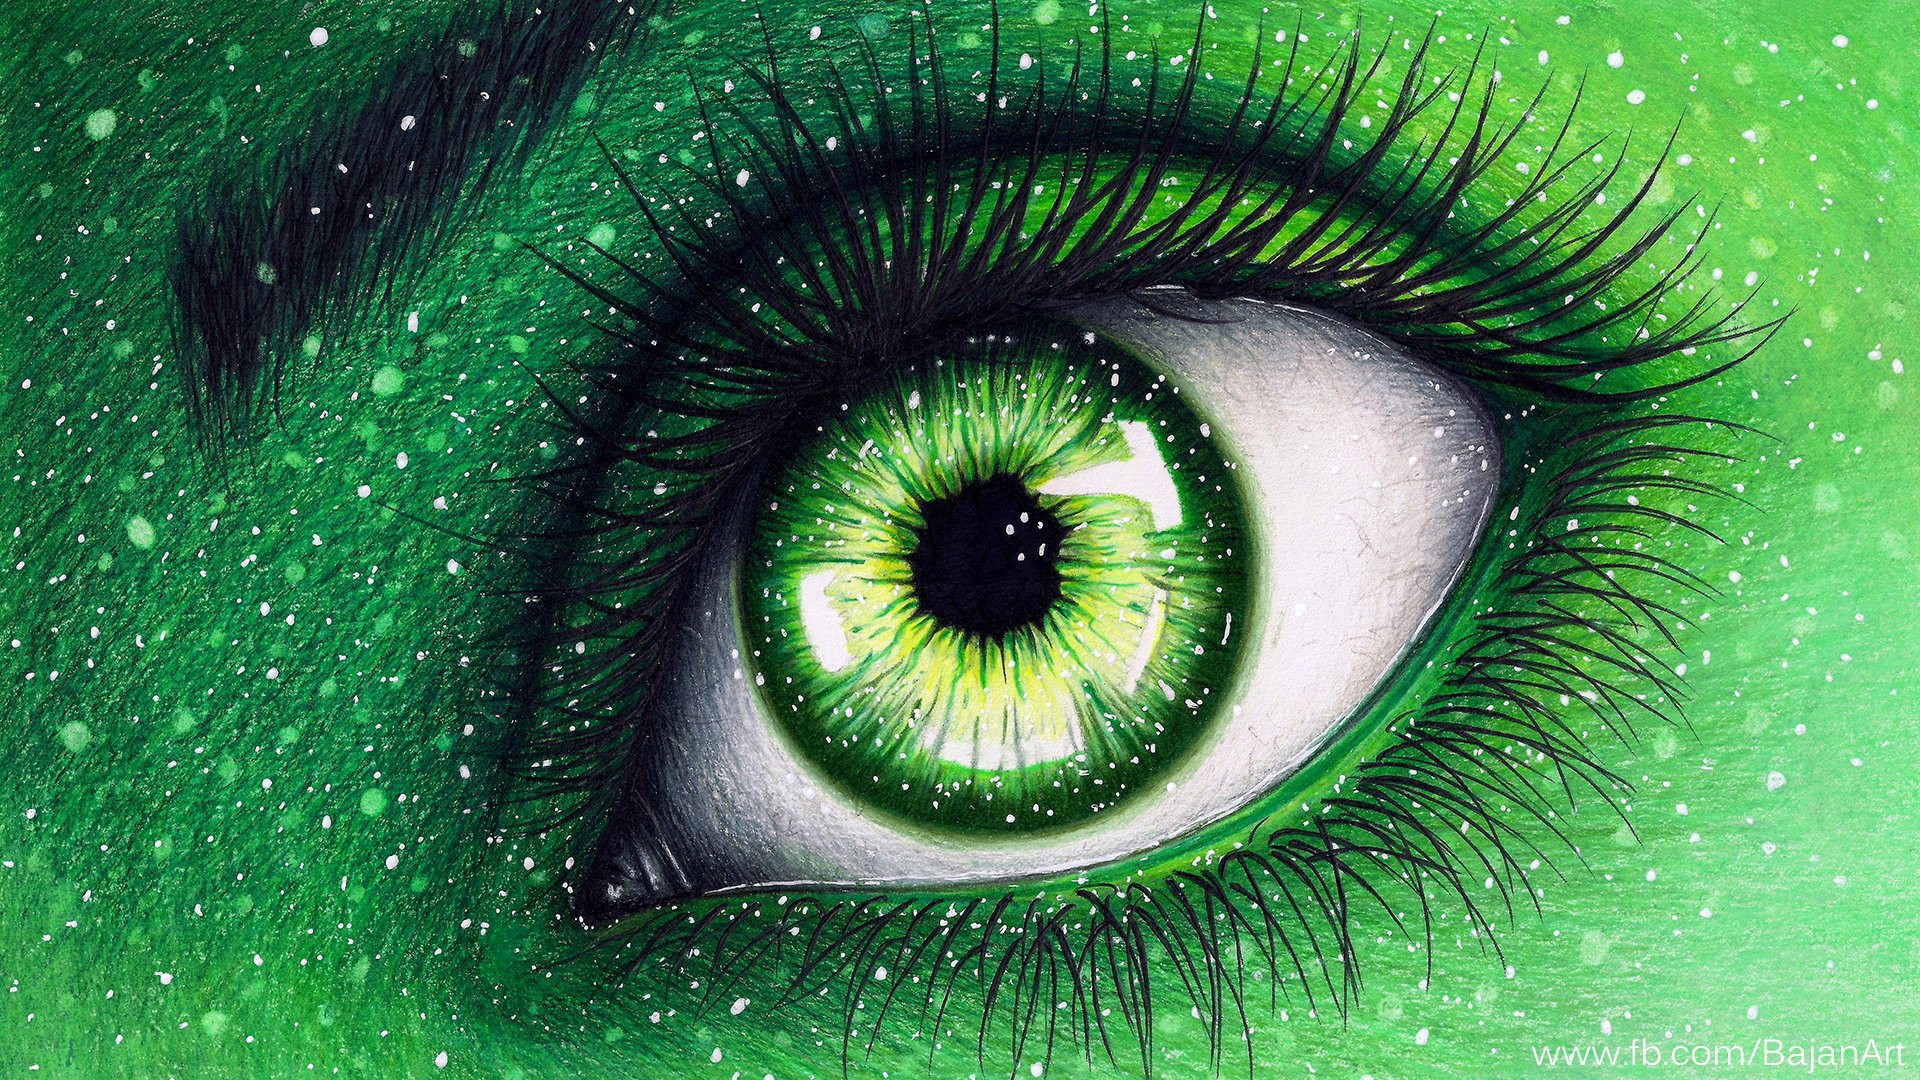 Green eye drawing Art - ID: 71365